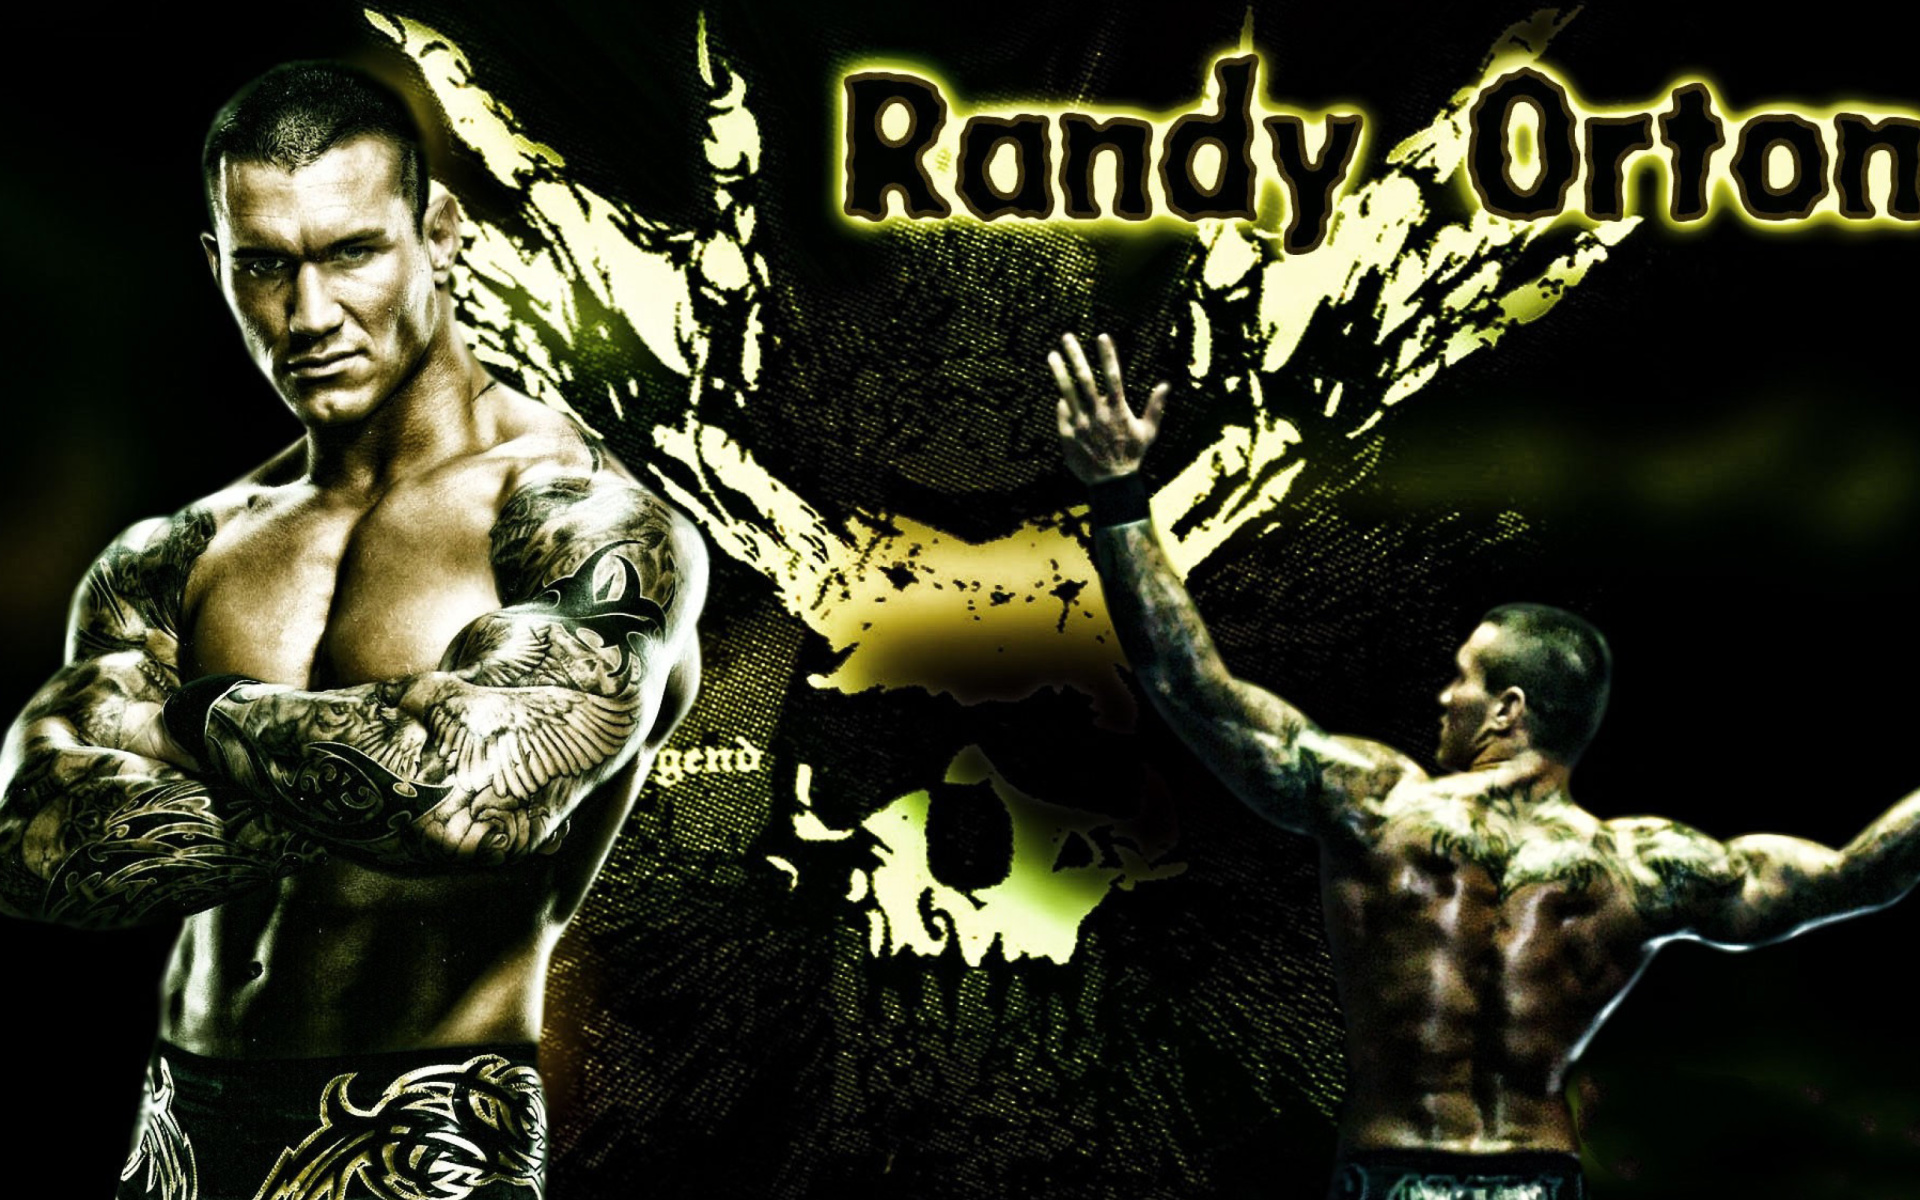 Randy Orton HD Background